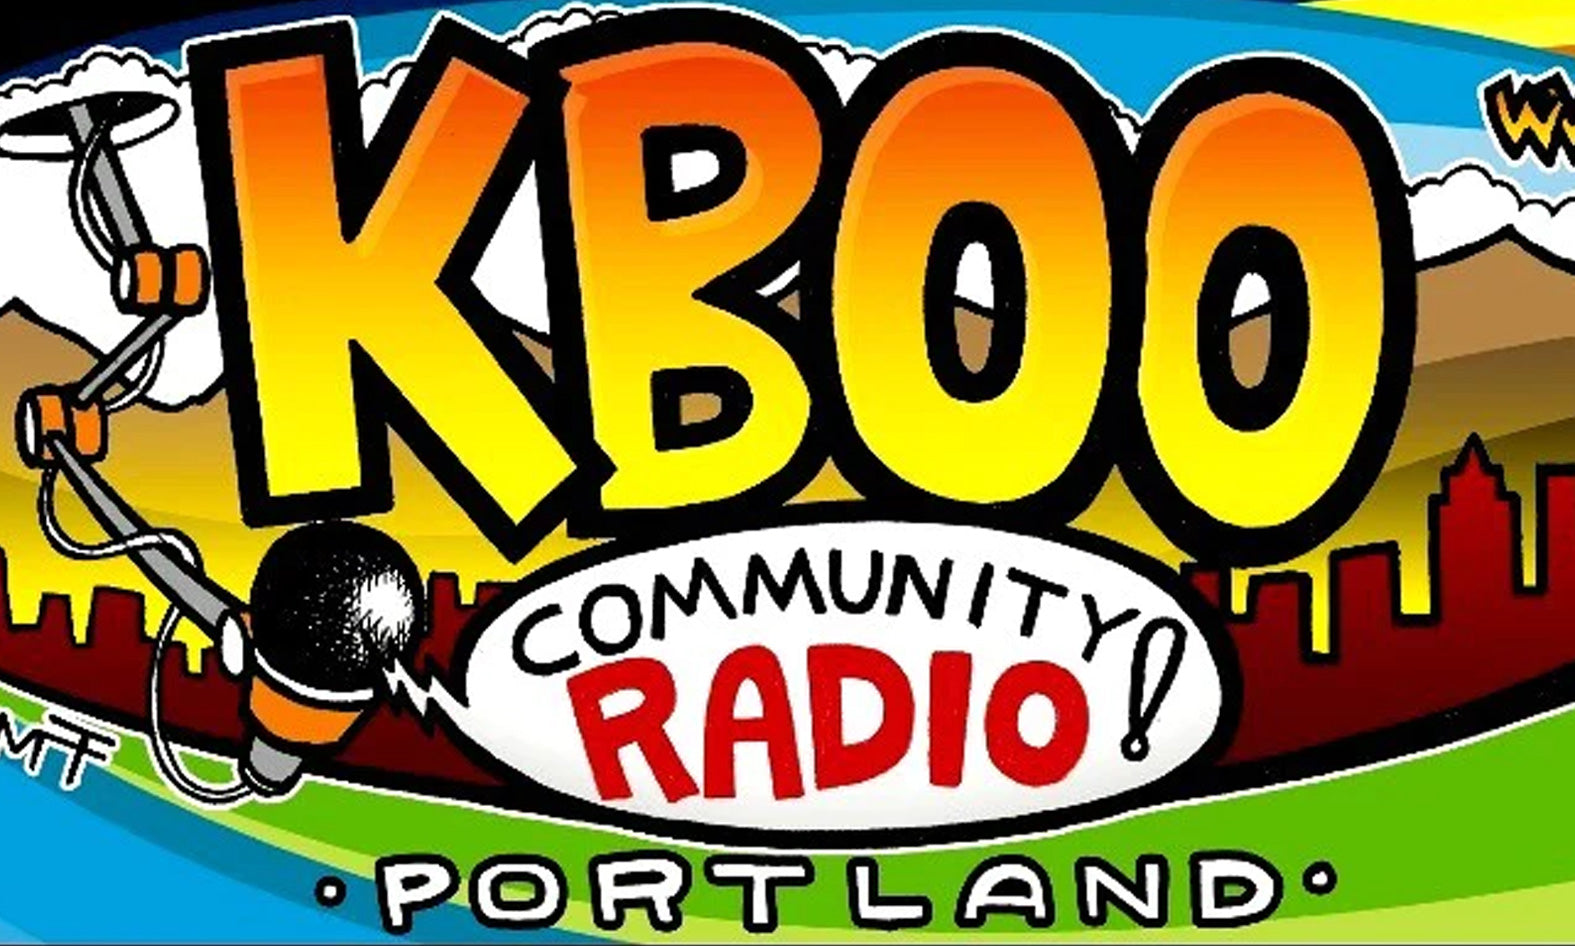 KBOO Community Radio Promo Label